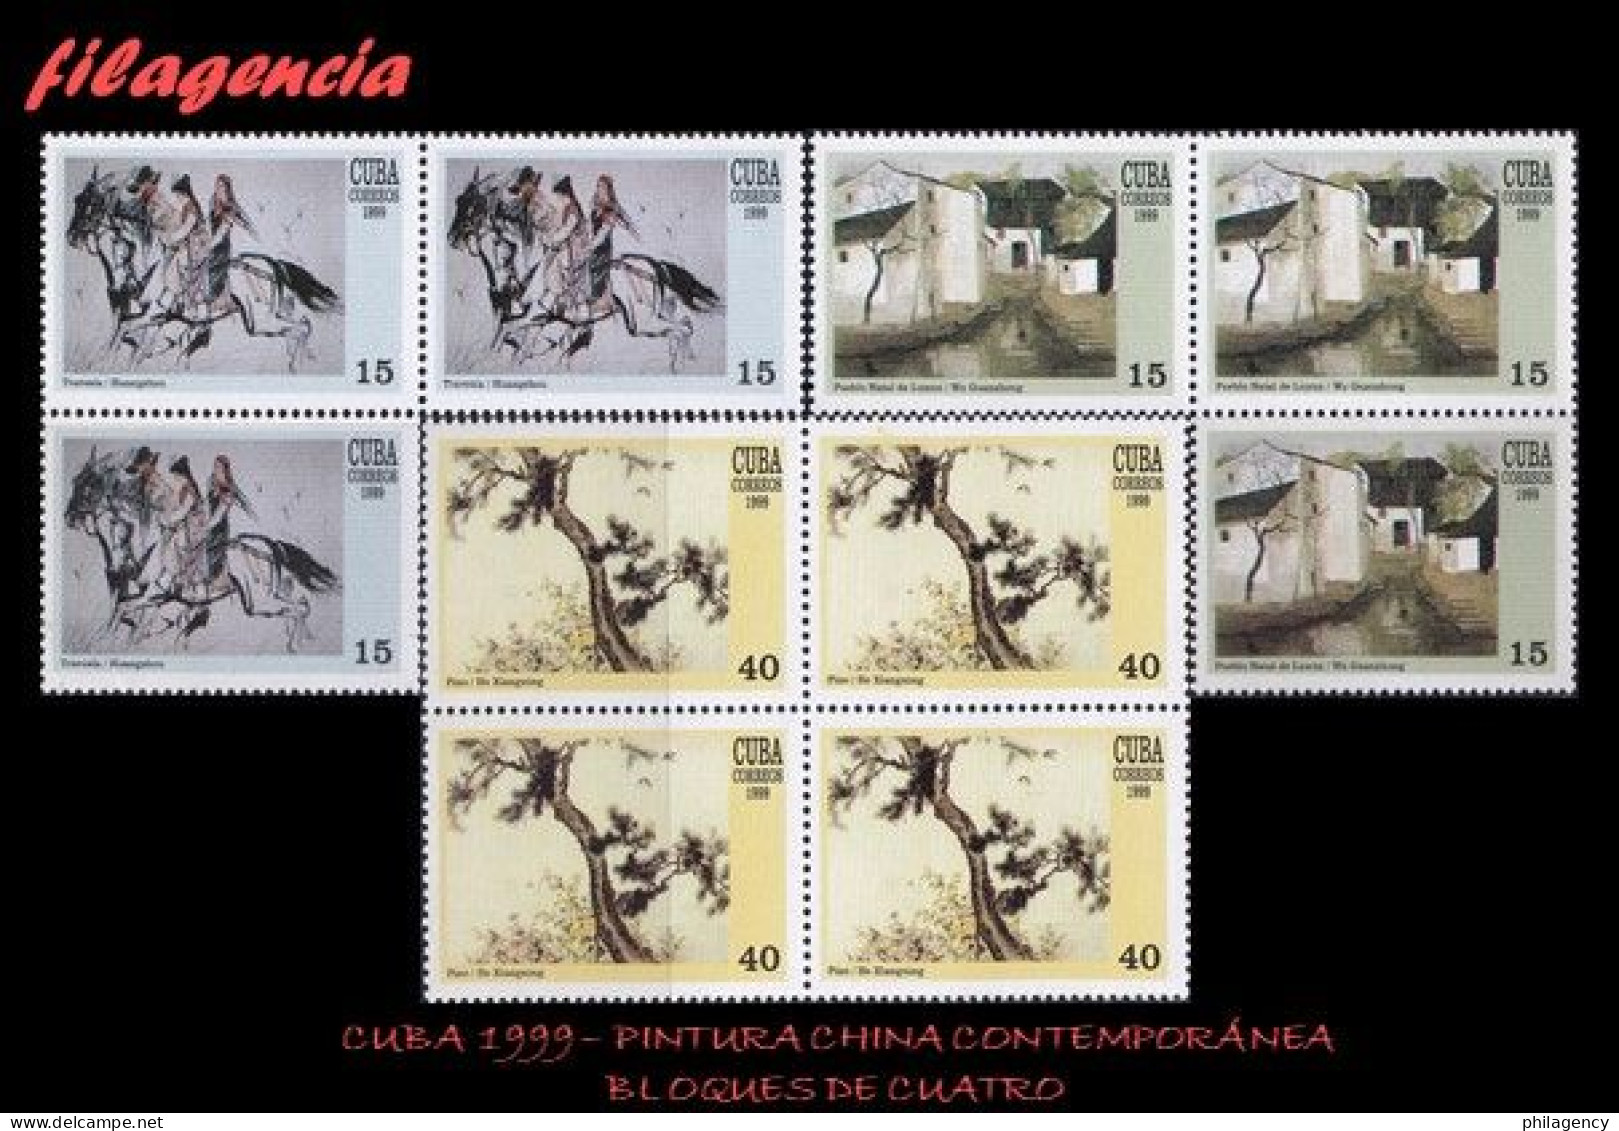 CUBA. BLOQUES DE CUATRO. 1999-19 PINTURA CHINA CONTEMPORÁNEA. EXPOSICIÓN FILATÉLICA CHINA 99 - Nuevos